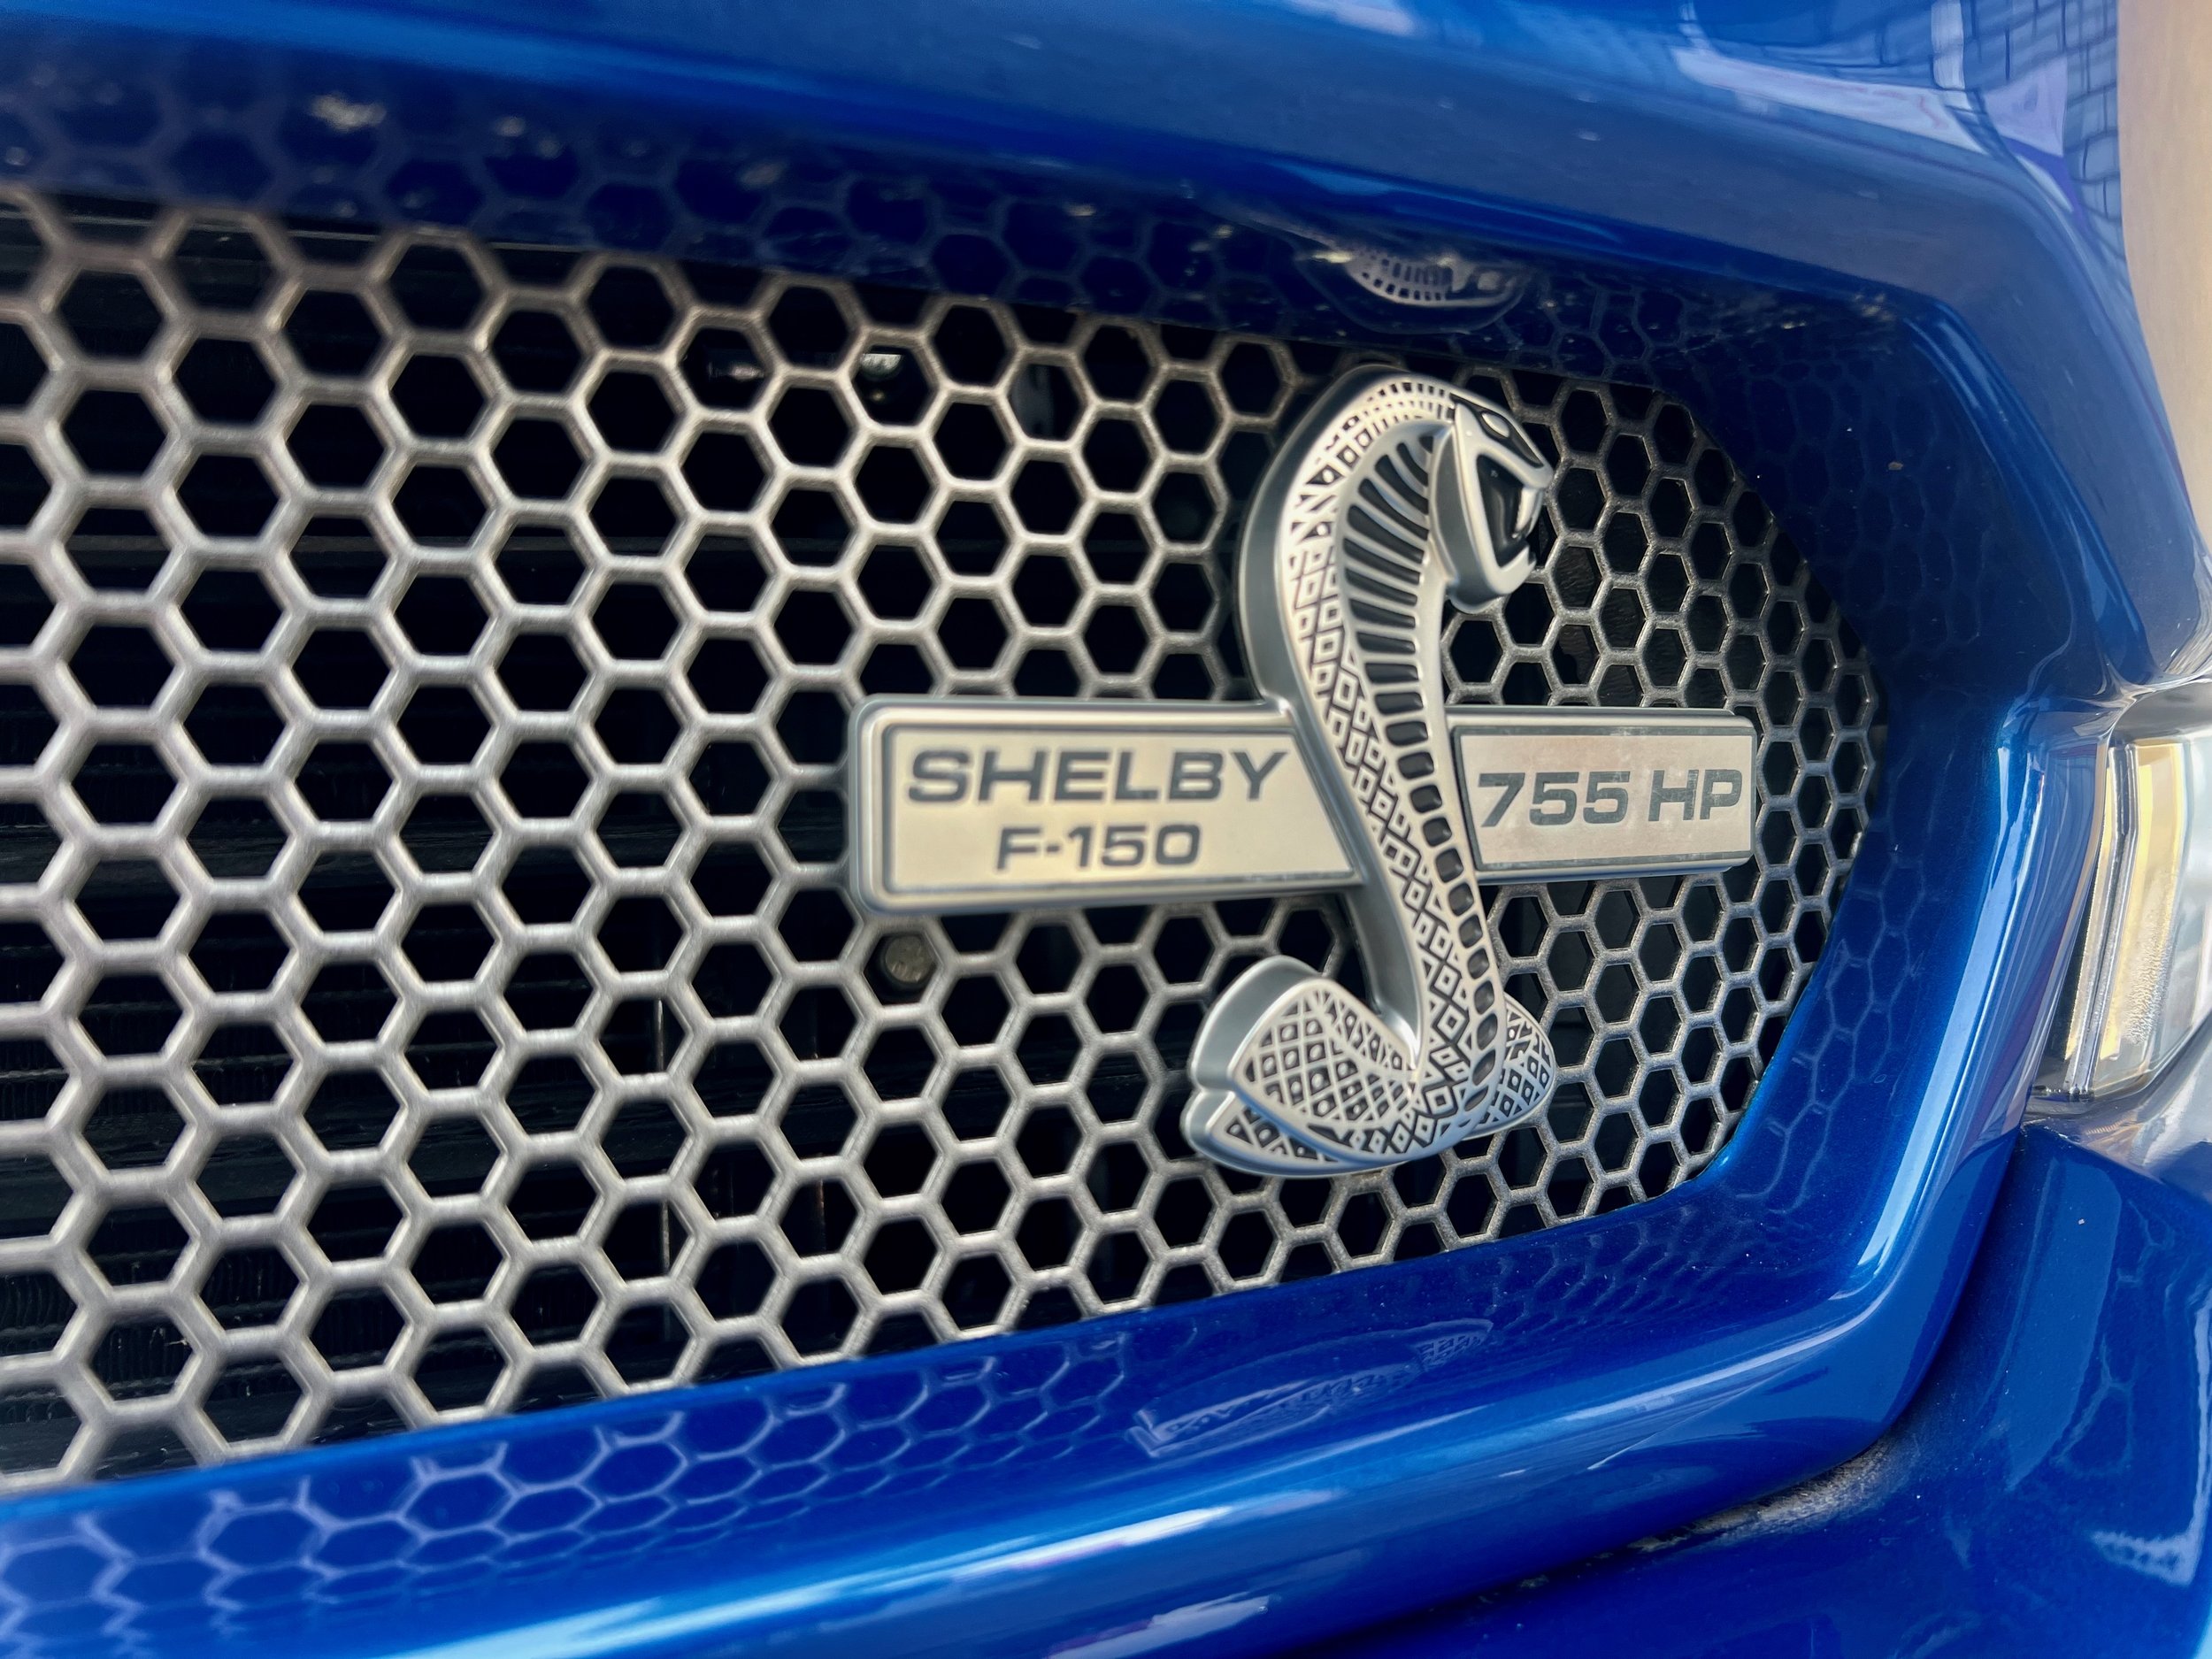 11 2019 F150 Shelby C.S.M. 18STX7134 Magni & Carnevale Motors.jpeg